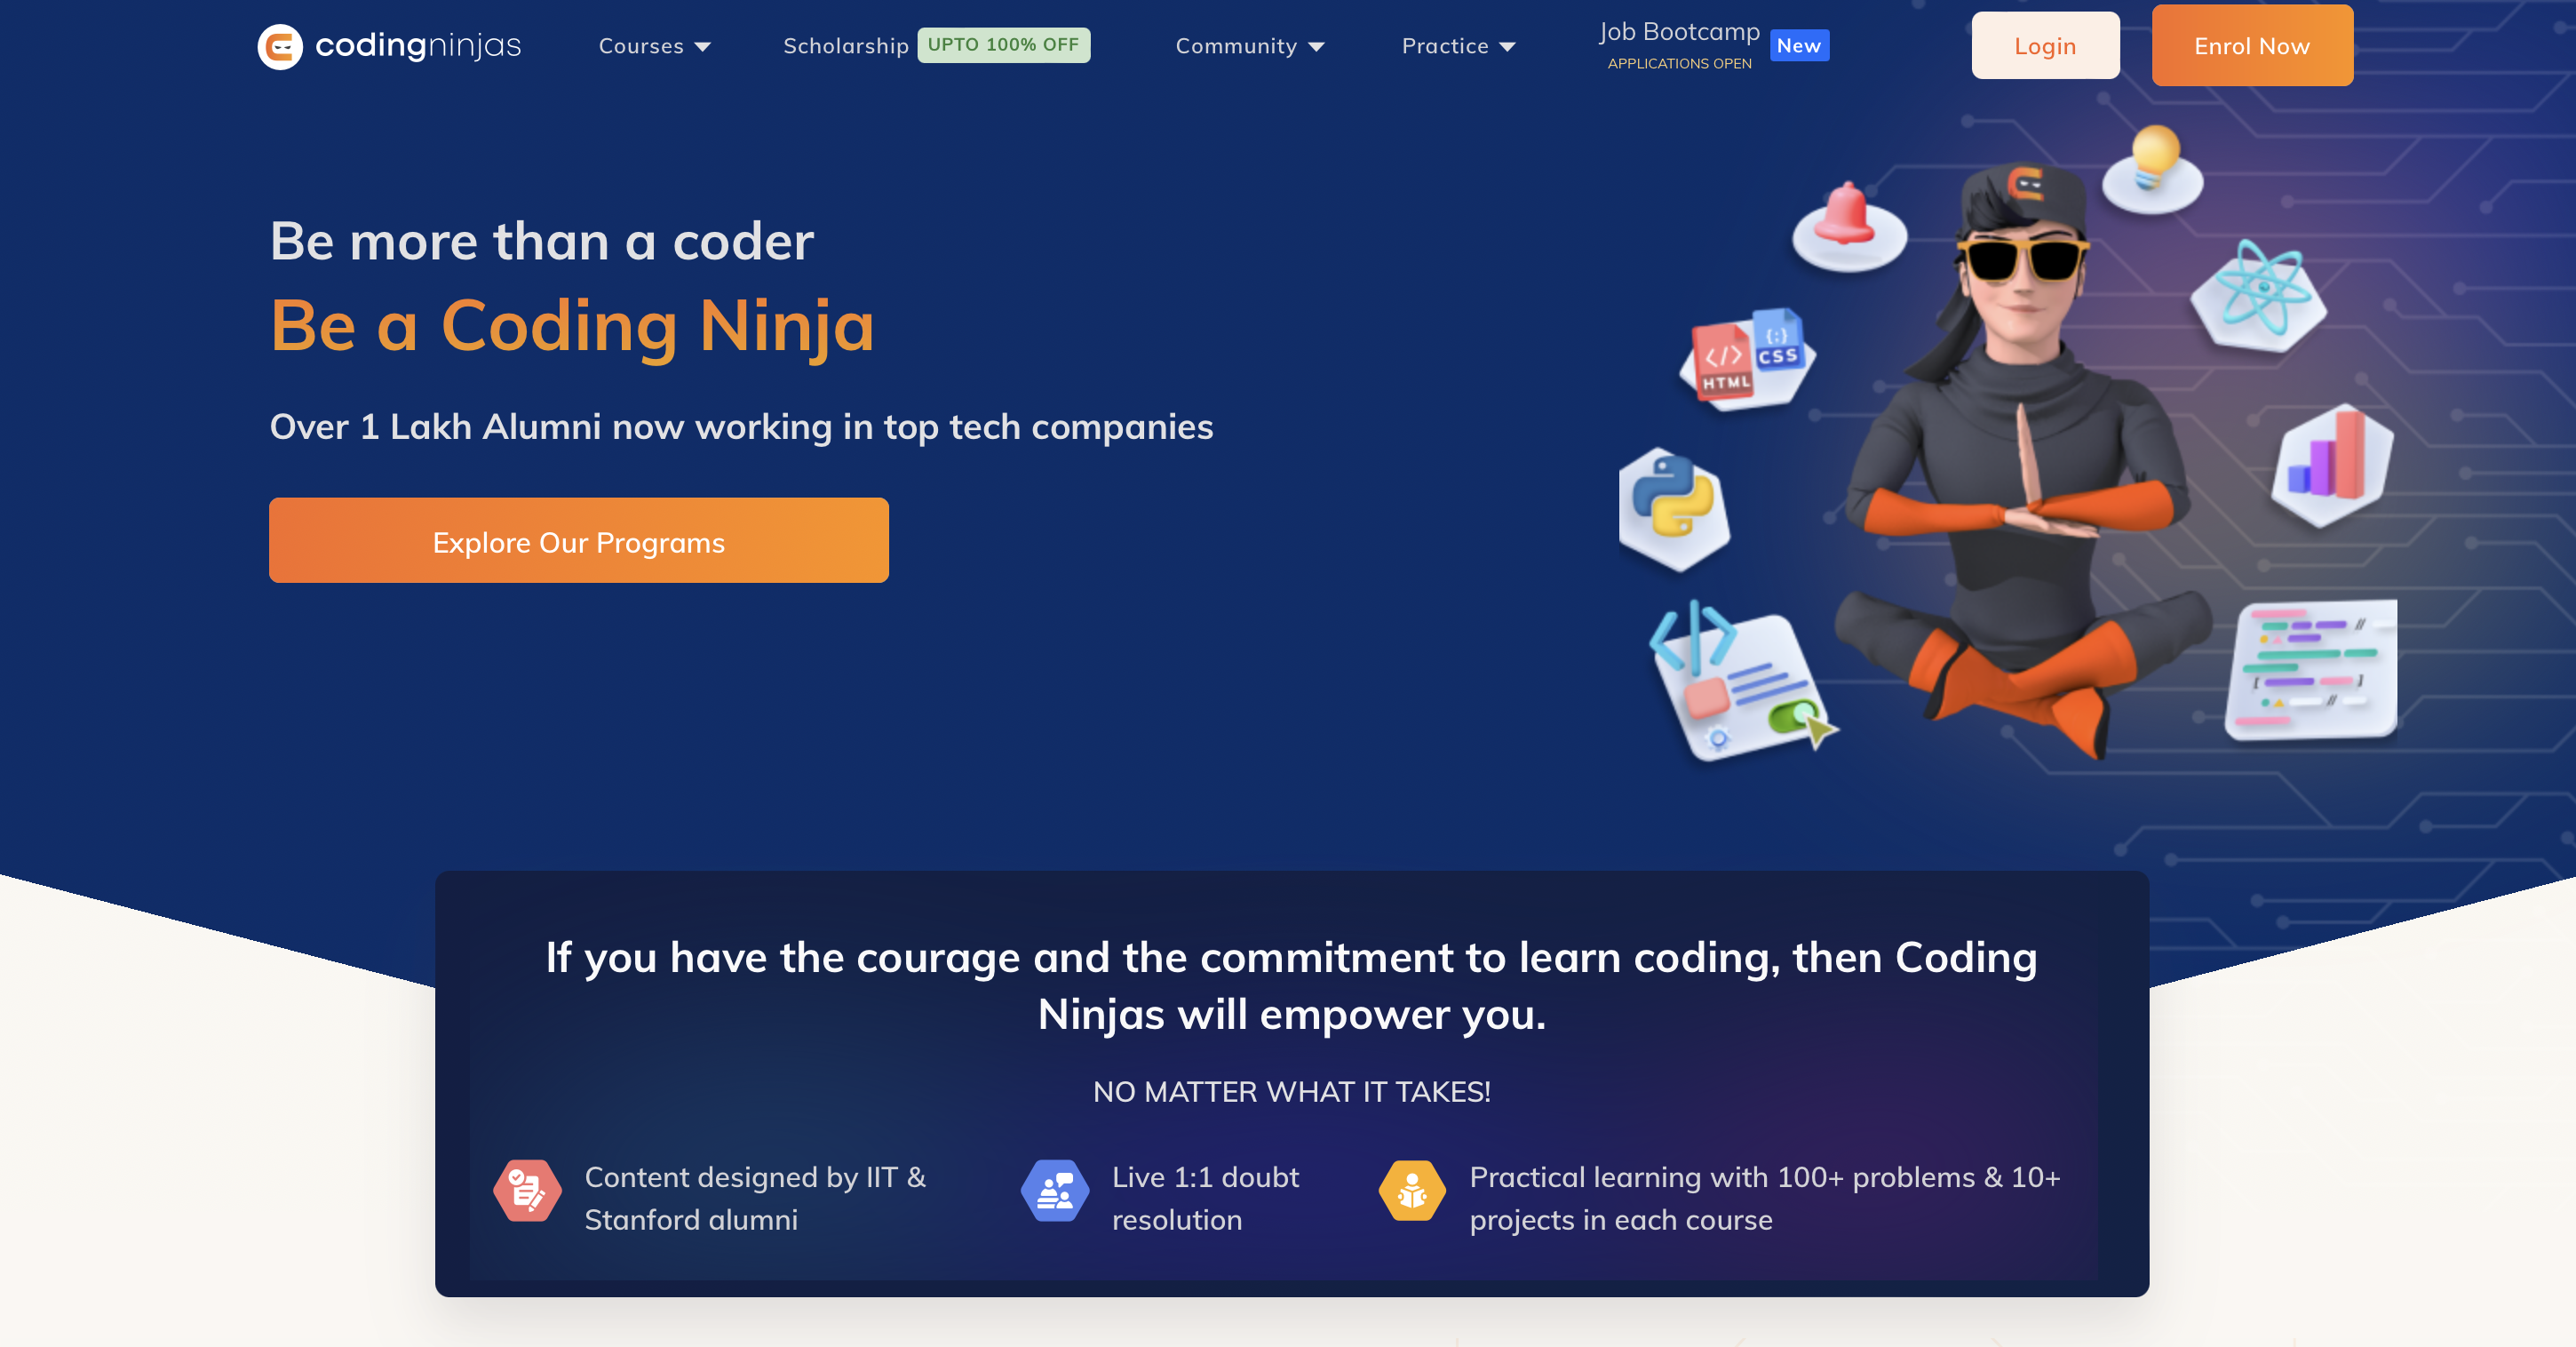 Coding Ninjas